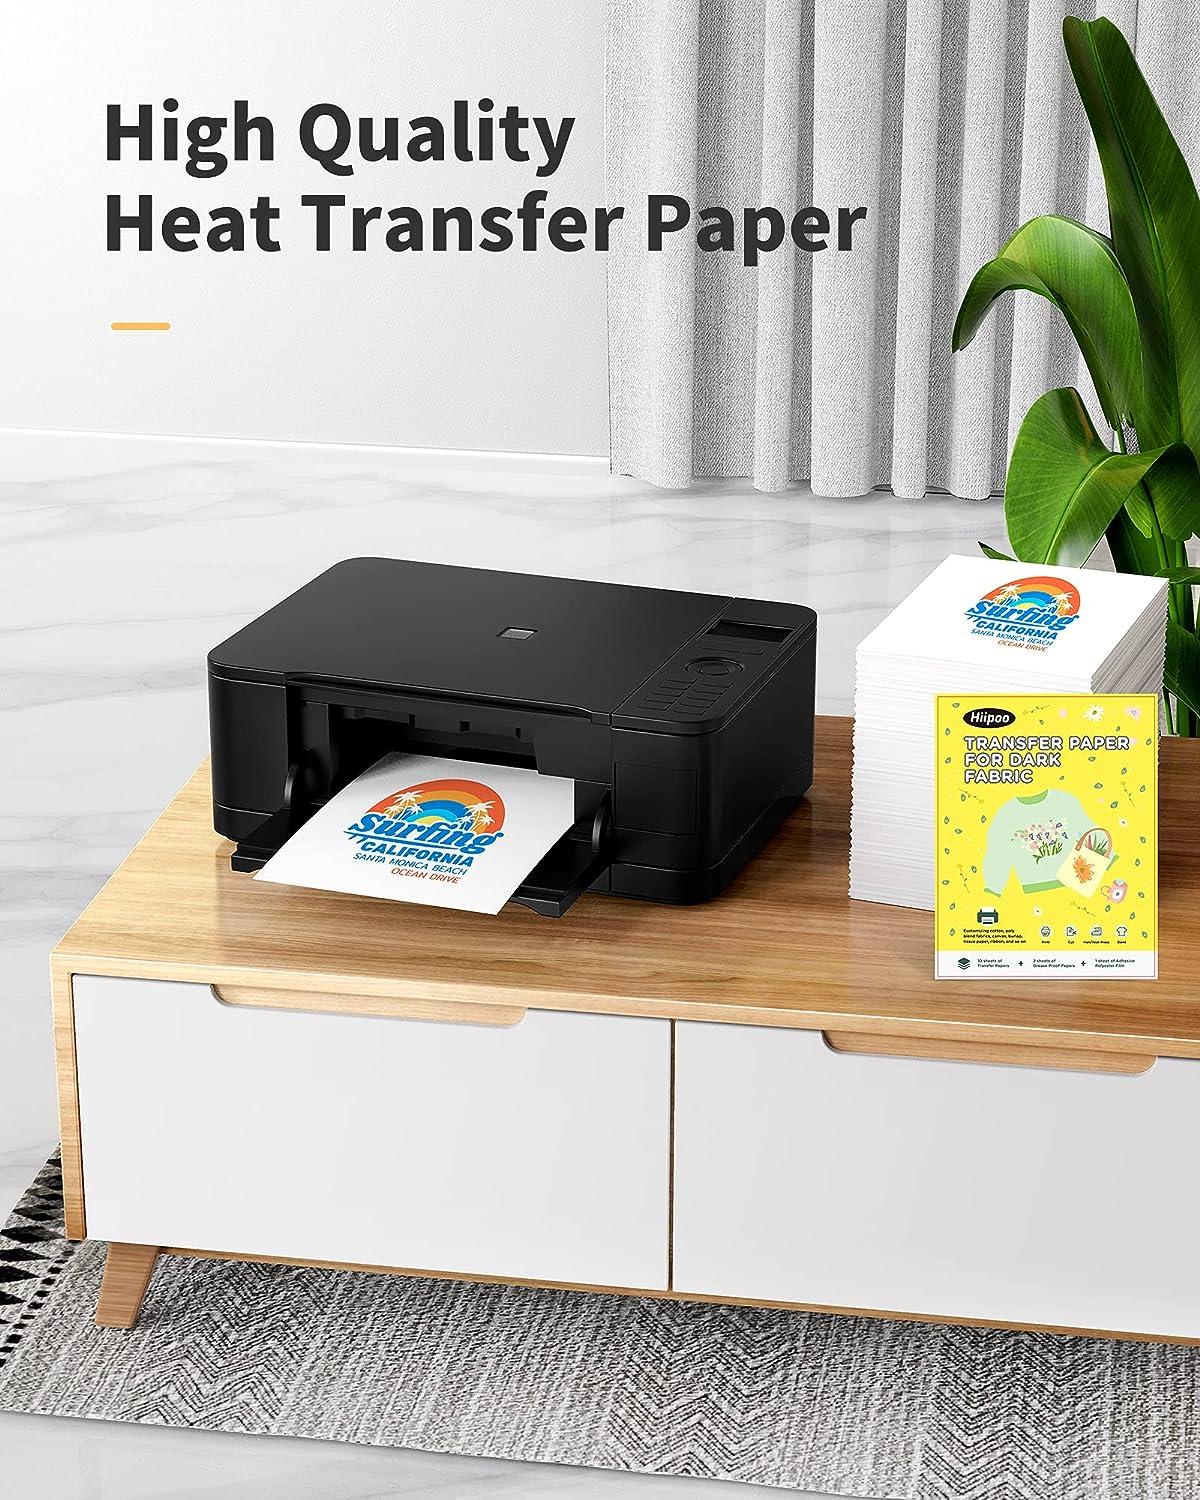  Hiipoo Heat Transfer Paper 8.5x11/in Iron-on Transfer